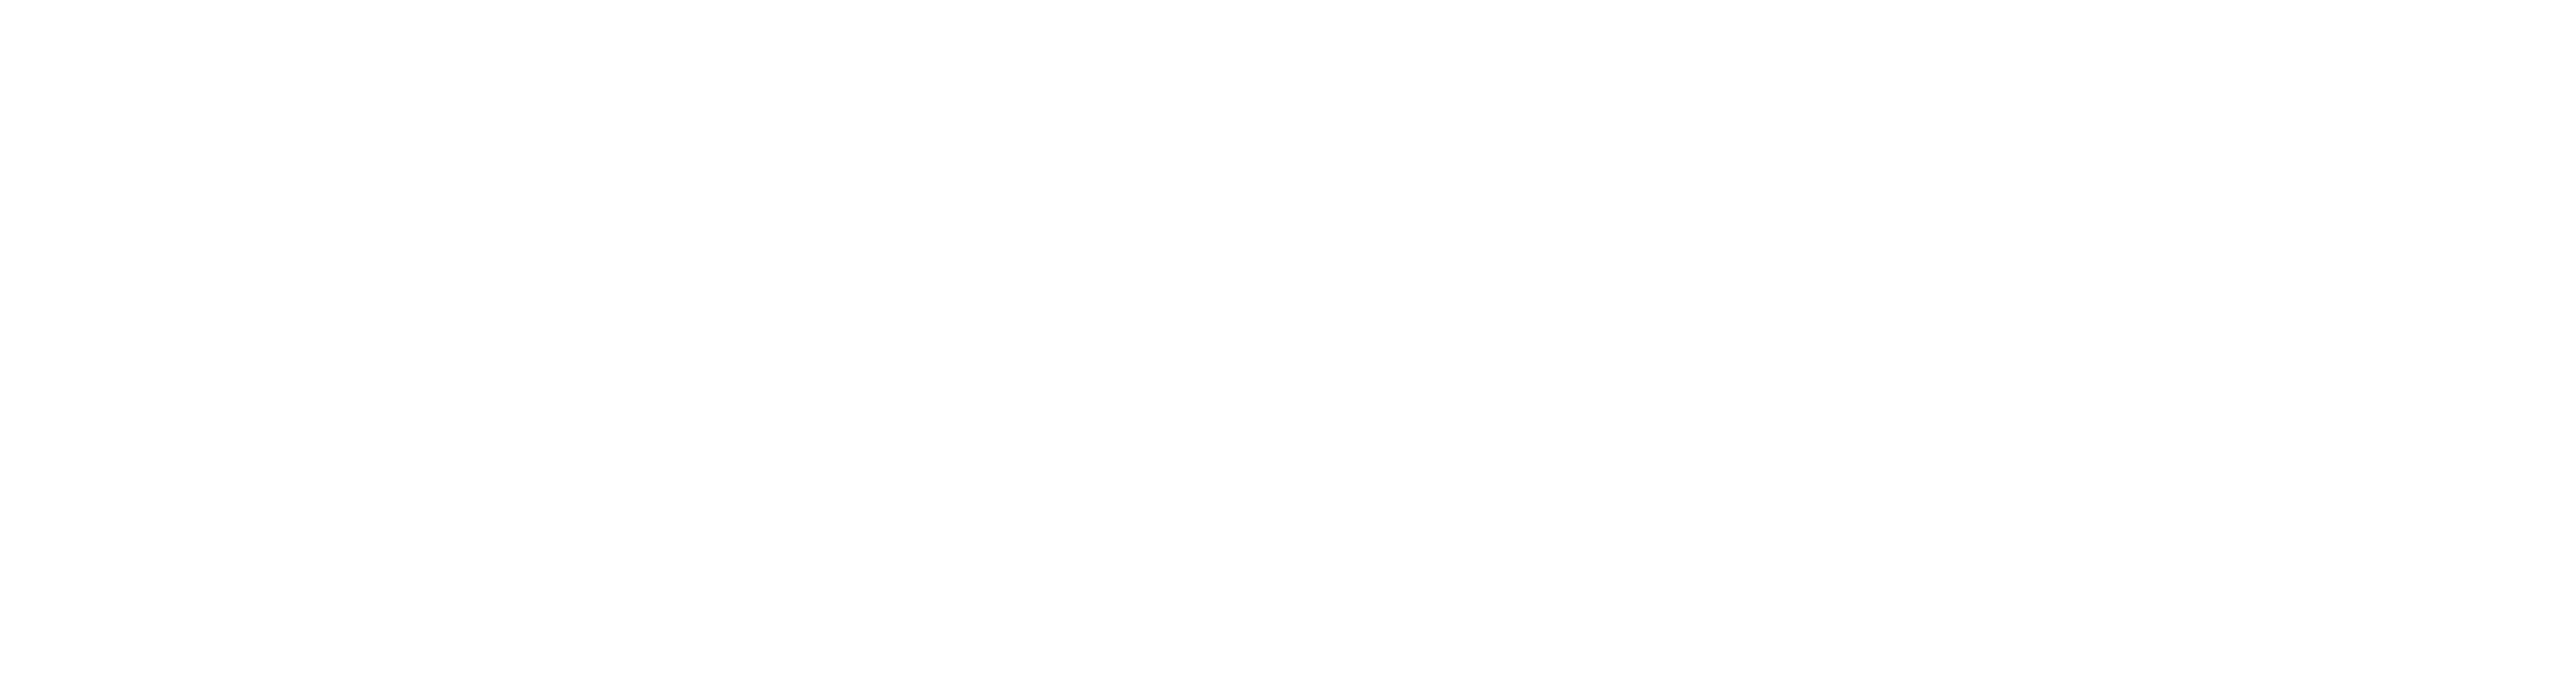 Samana Developer Logo